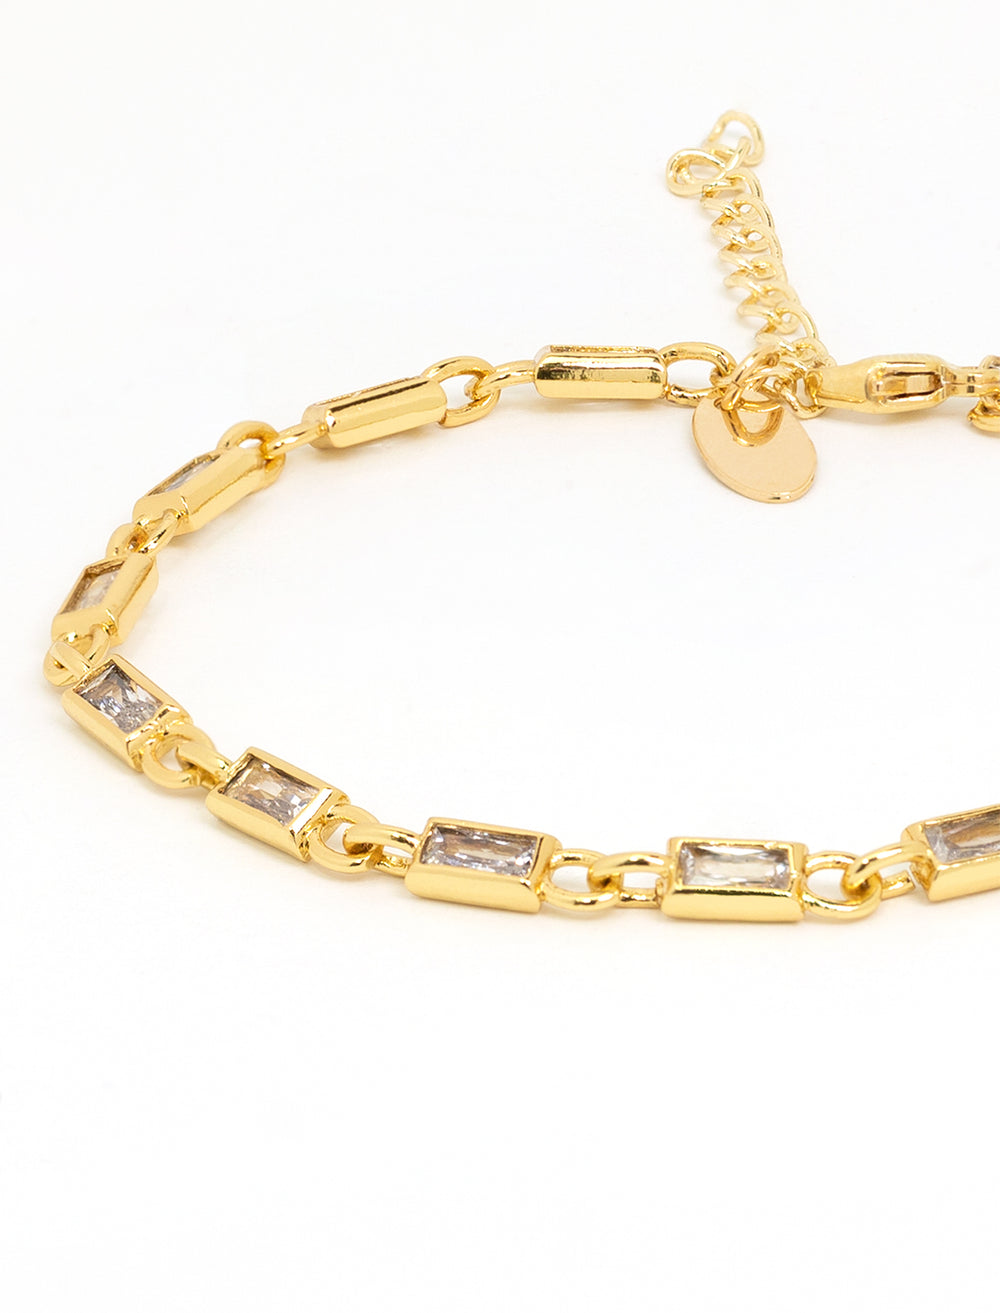 Close-up view of Jonesy Wood's beckett chain bracelet.